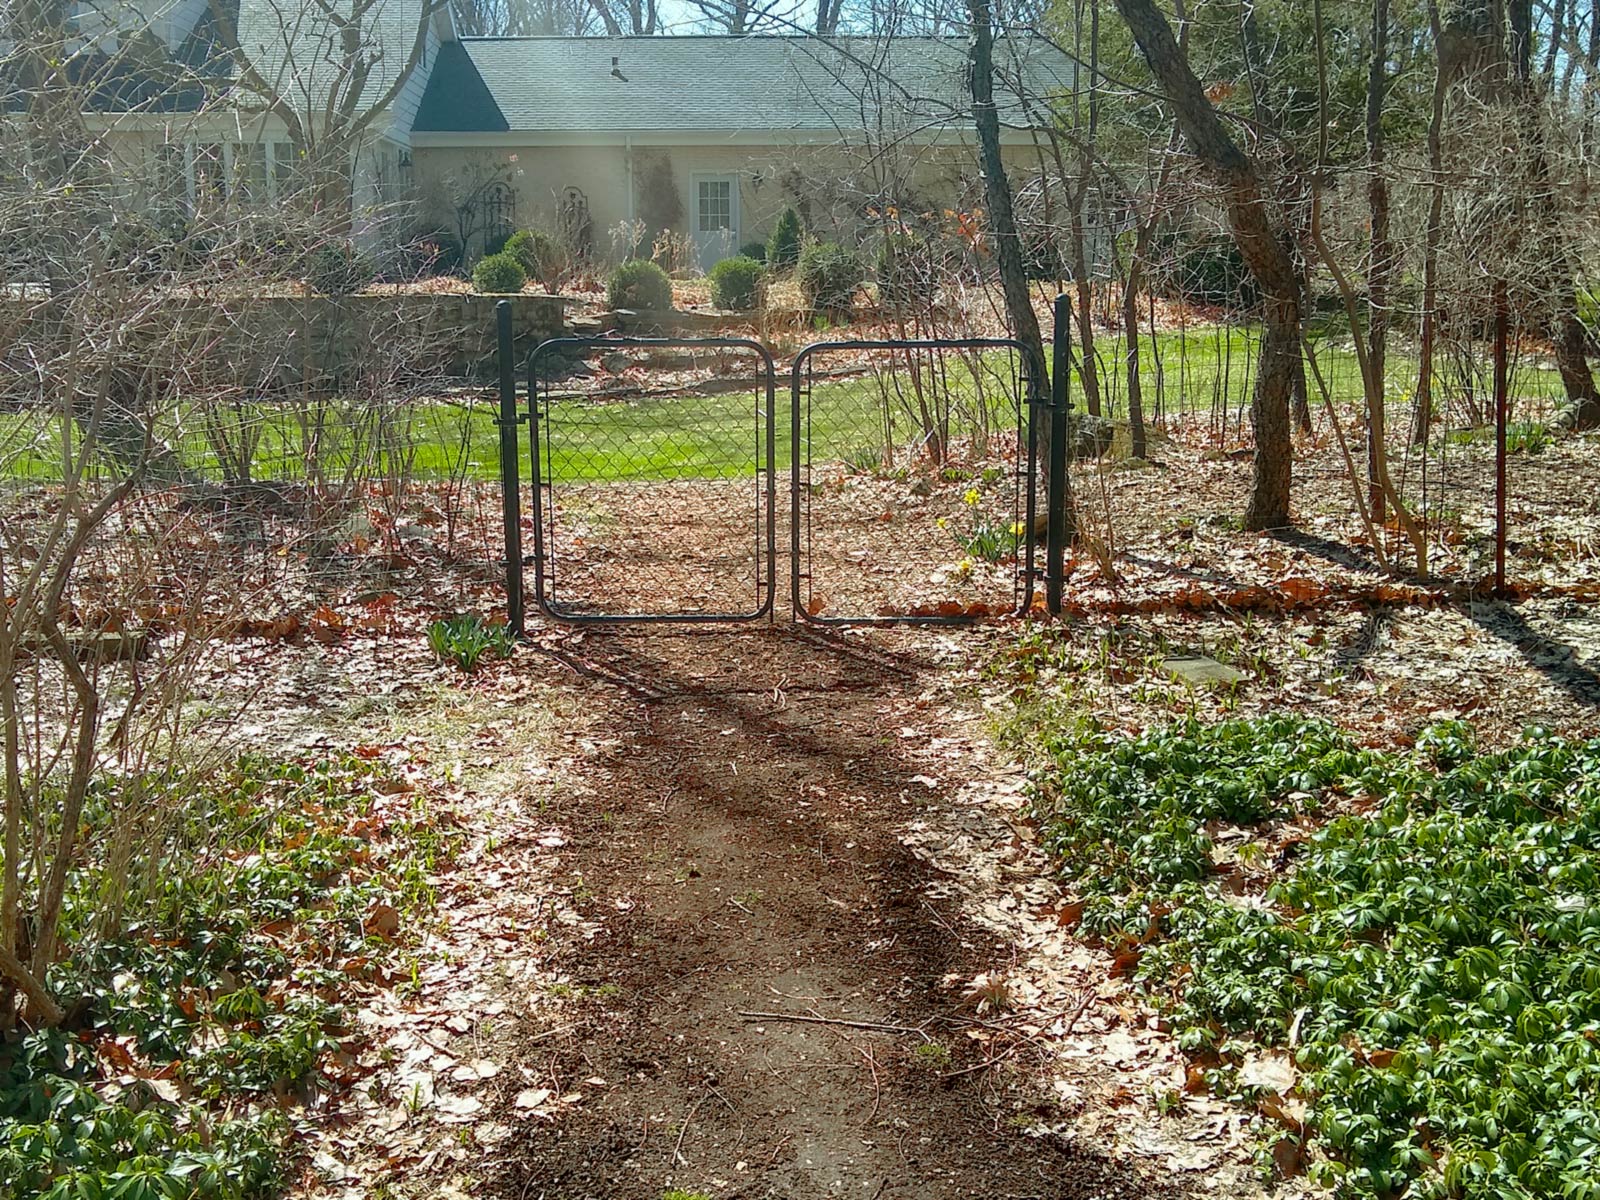 A landscaped, manicured dirt path dug into public land.